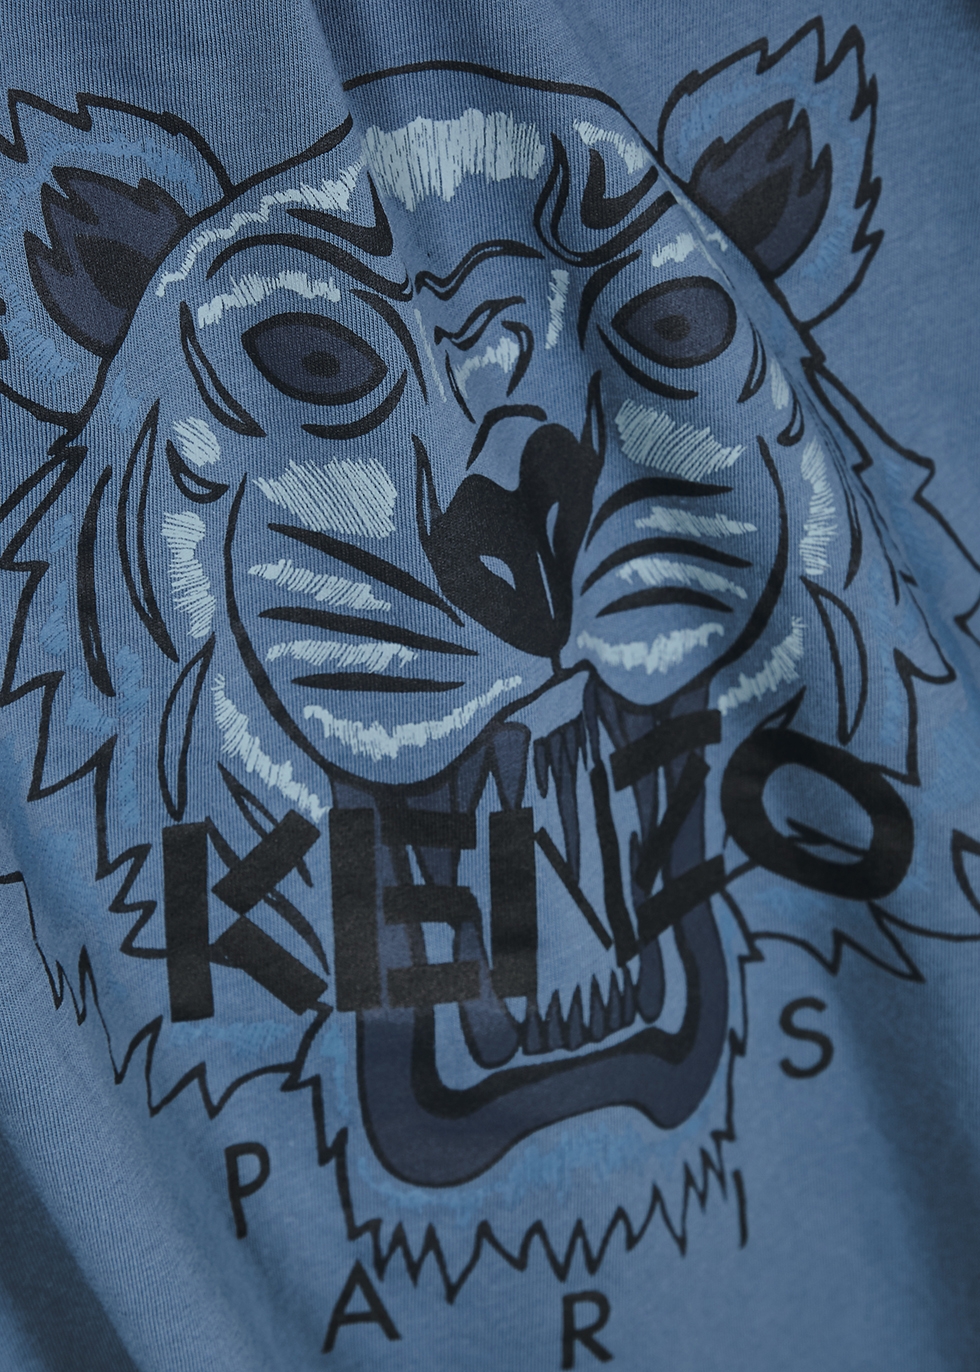 kenzo blue tiger